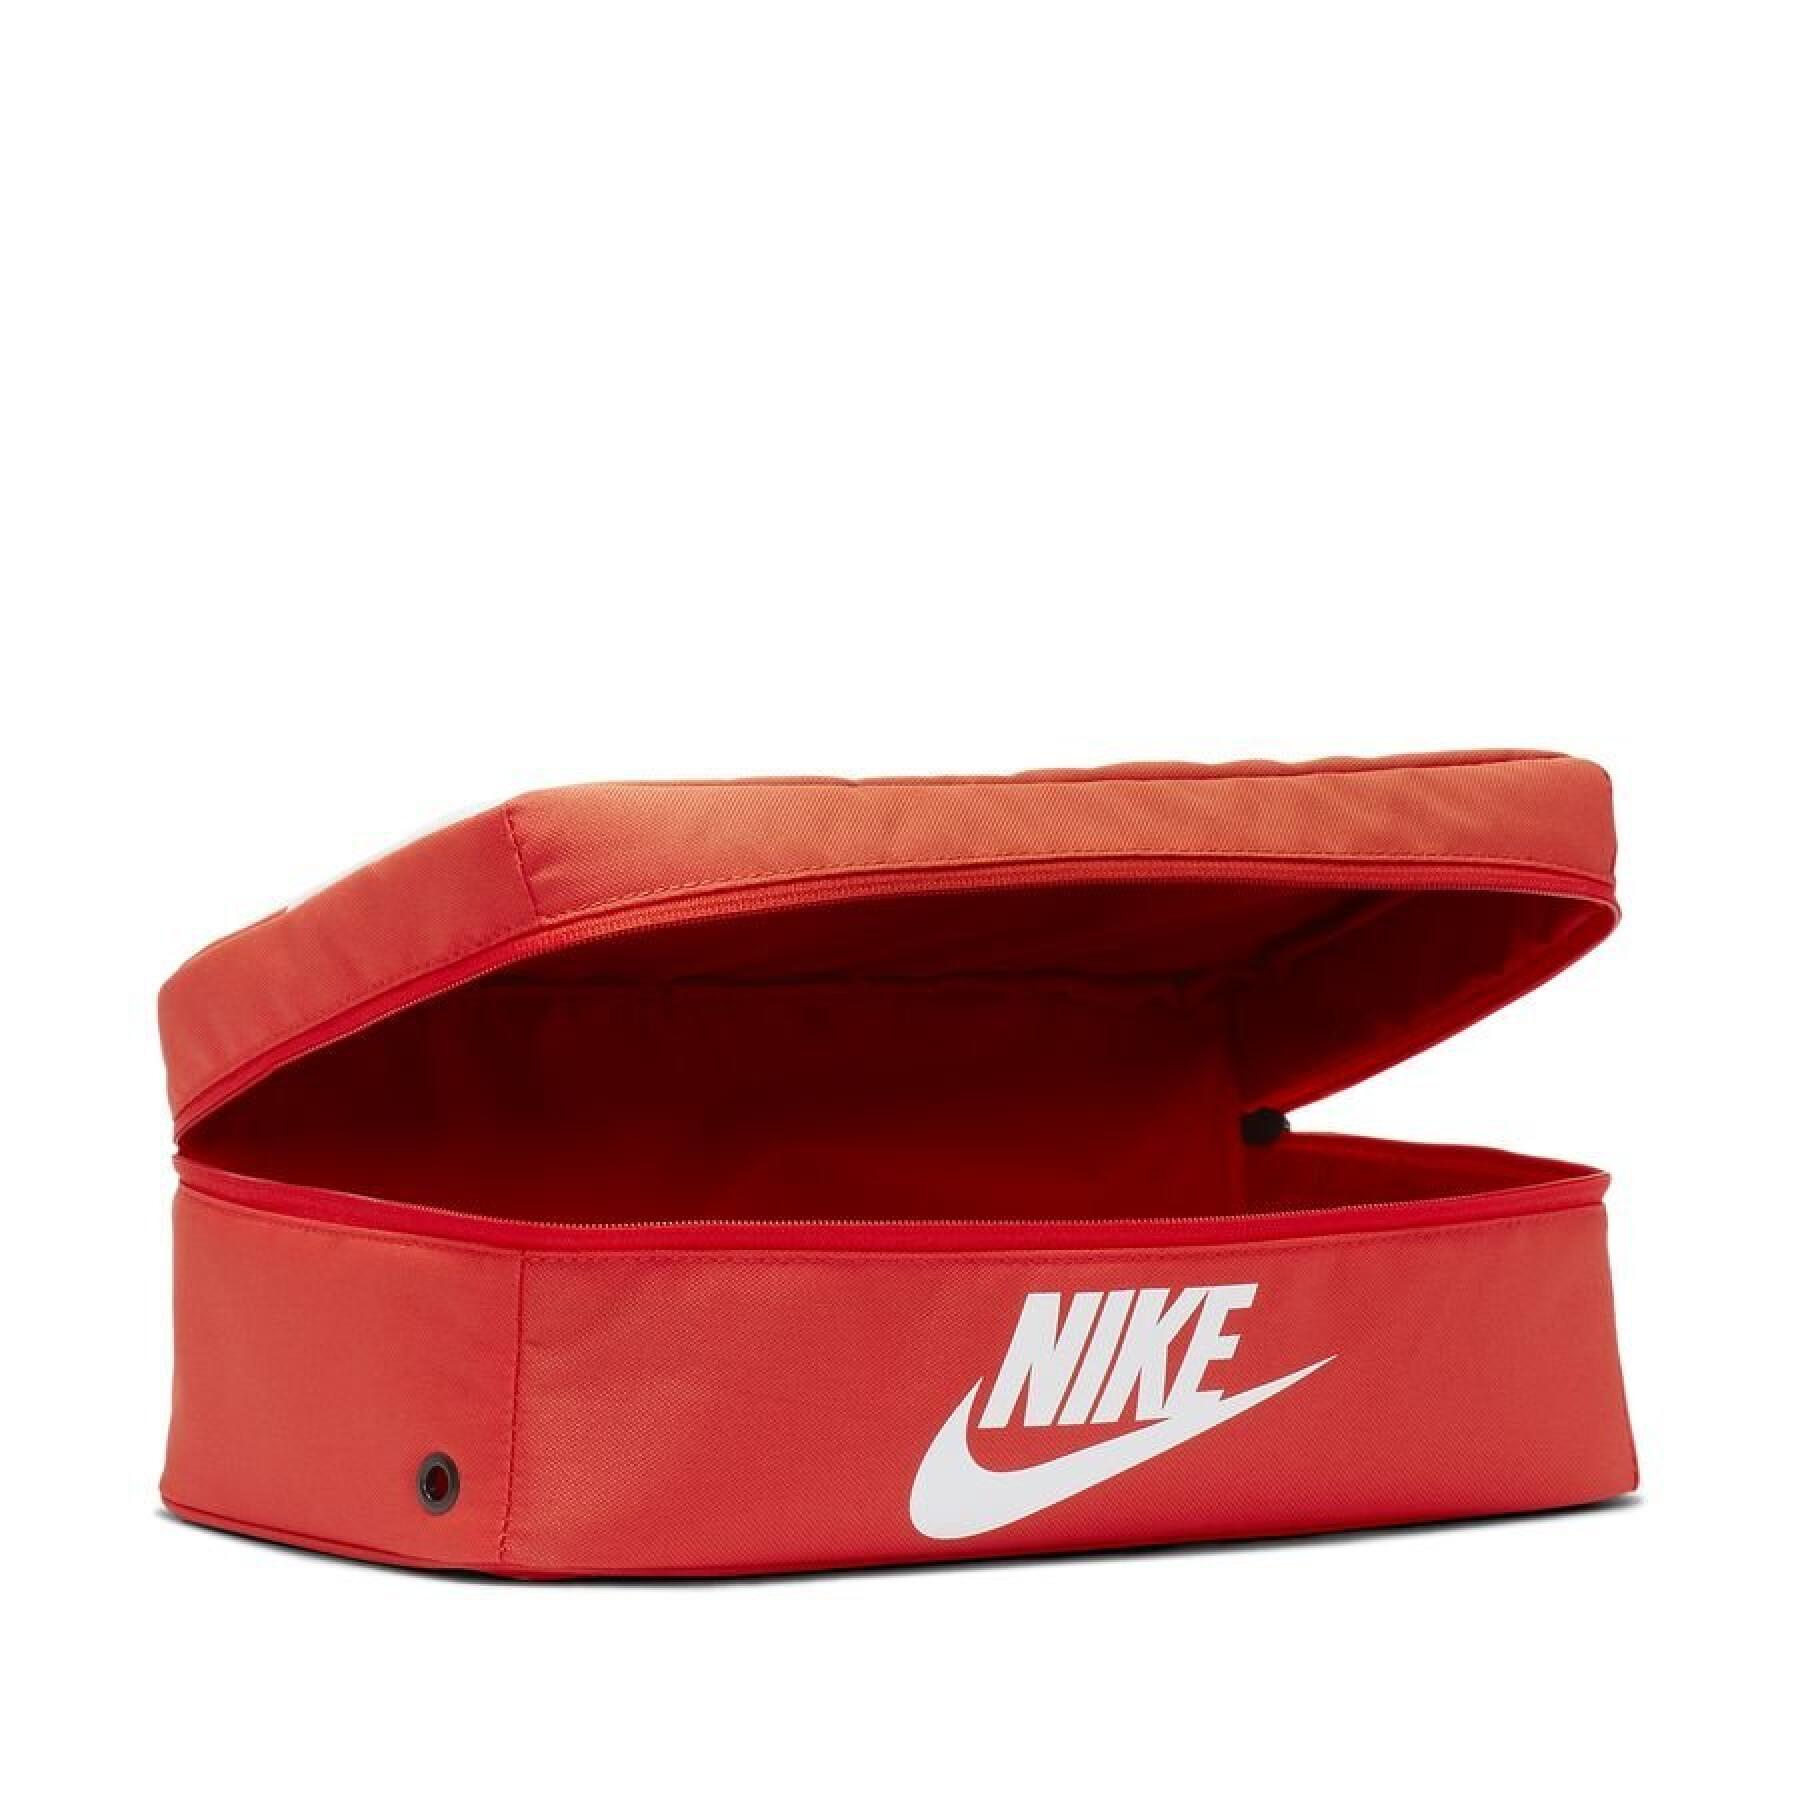 Schoenentas met rits Nike